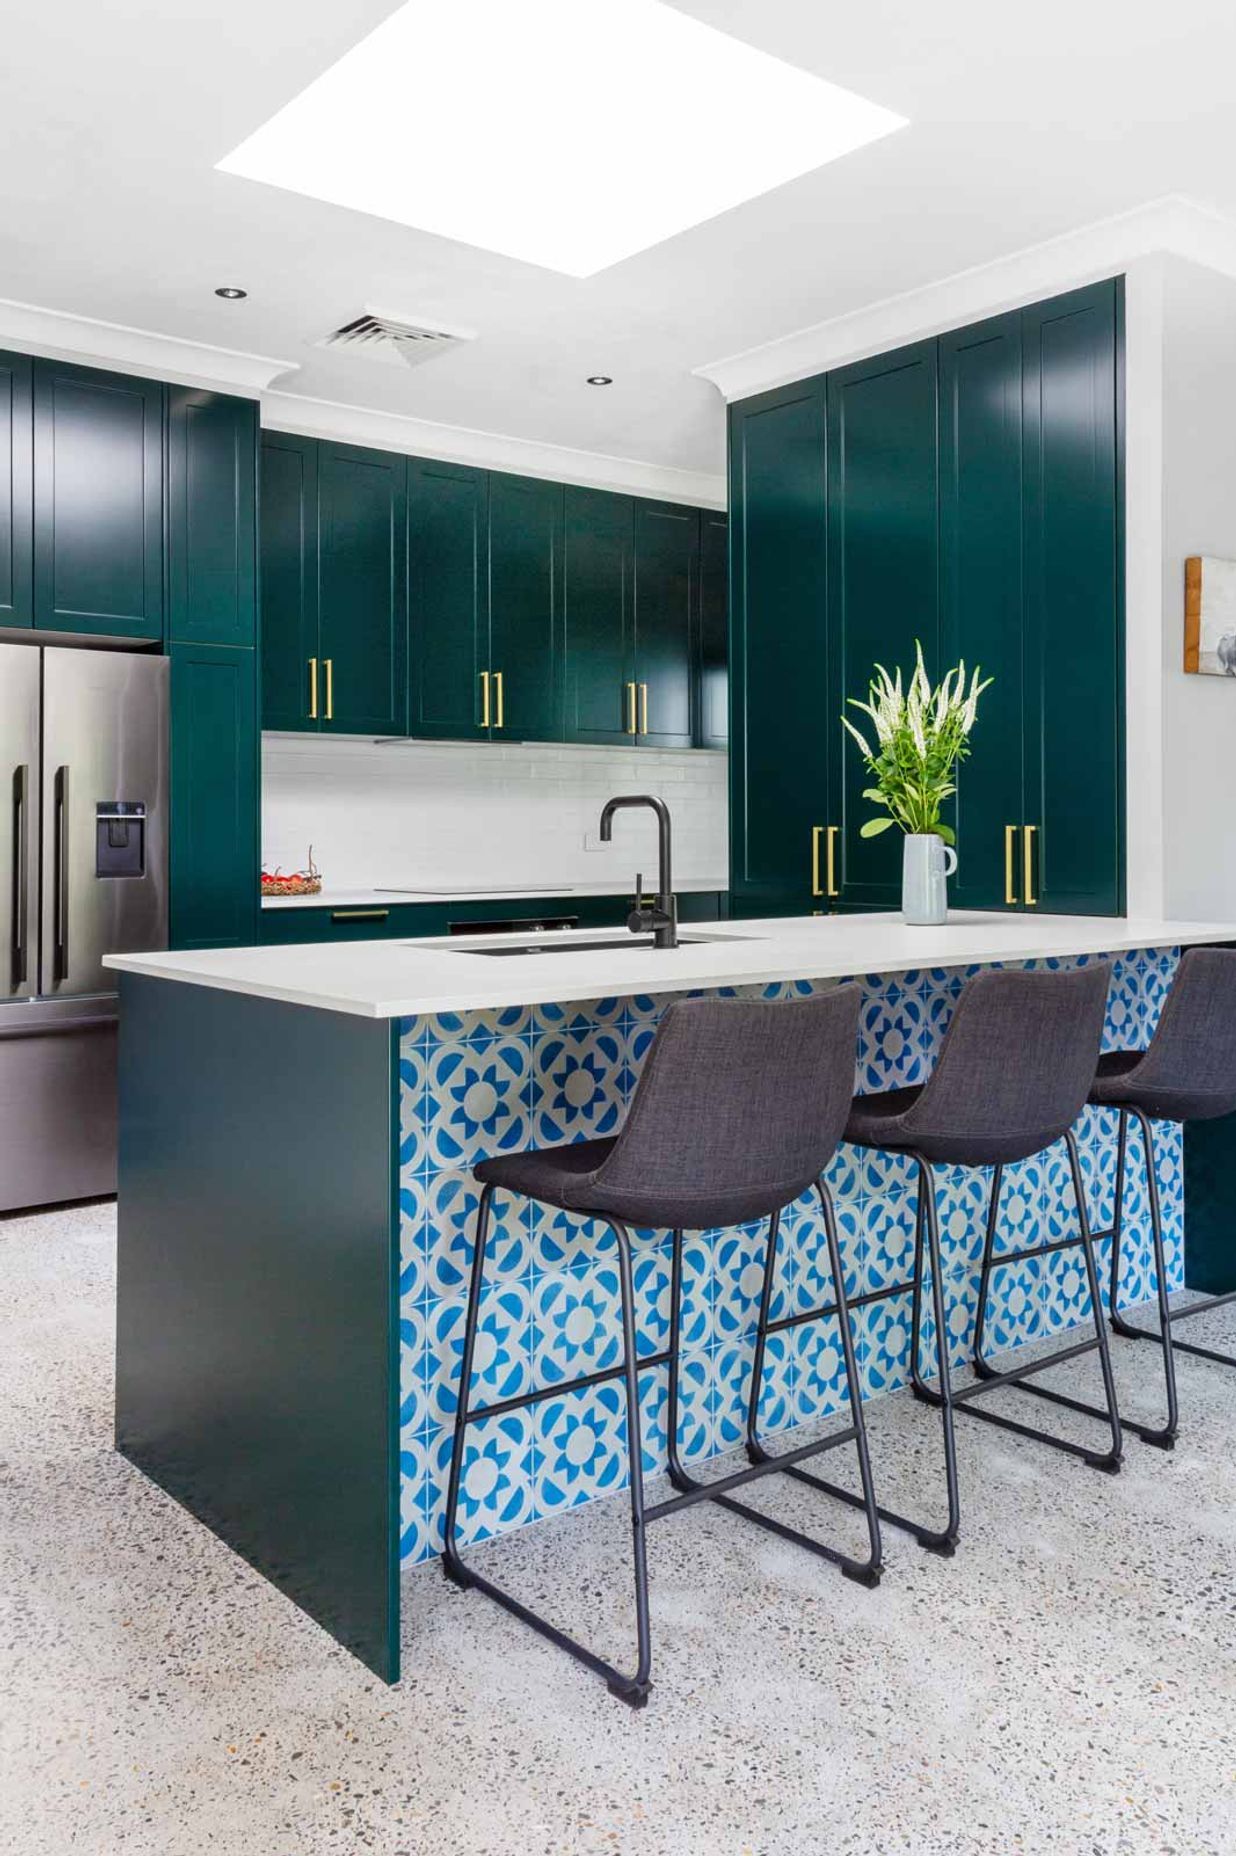 caesarstone-kitchen-design-sydney-green-white-luxury-premier-kitchens-statuario-maximus-03.jpg